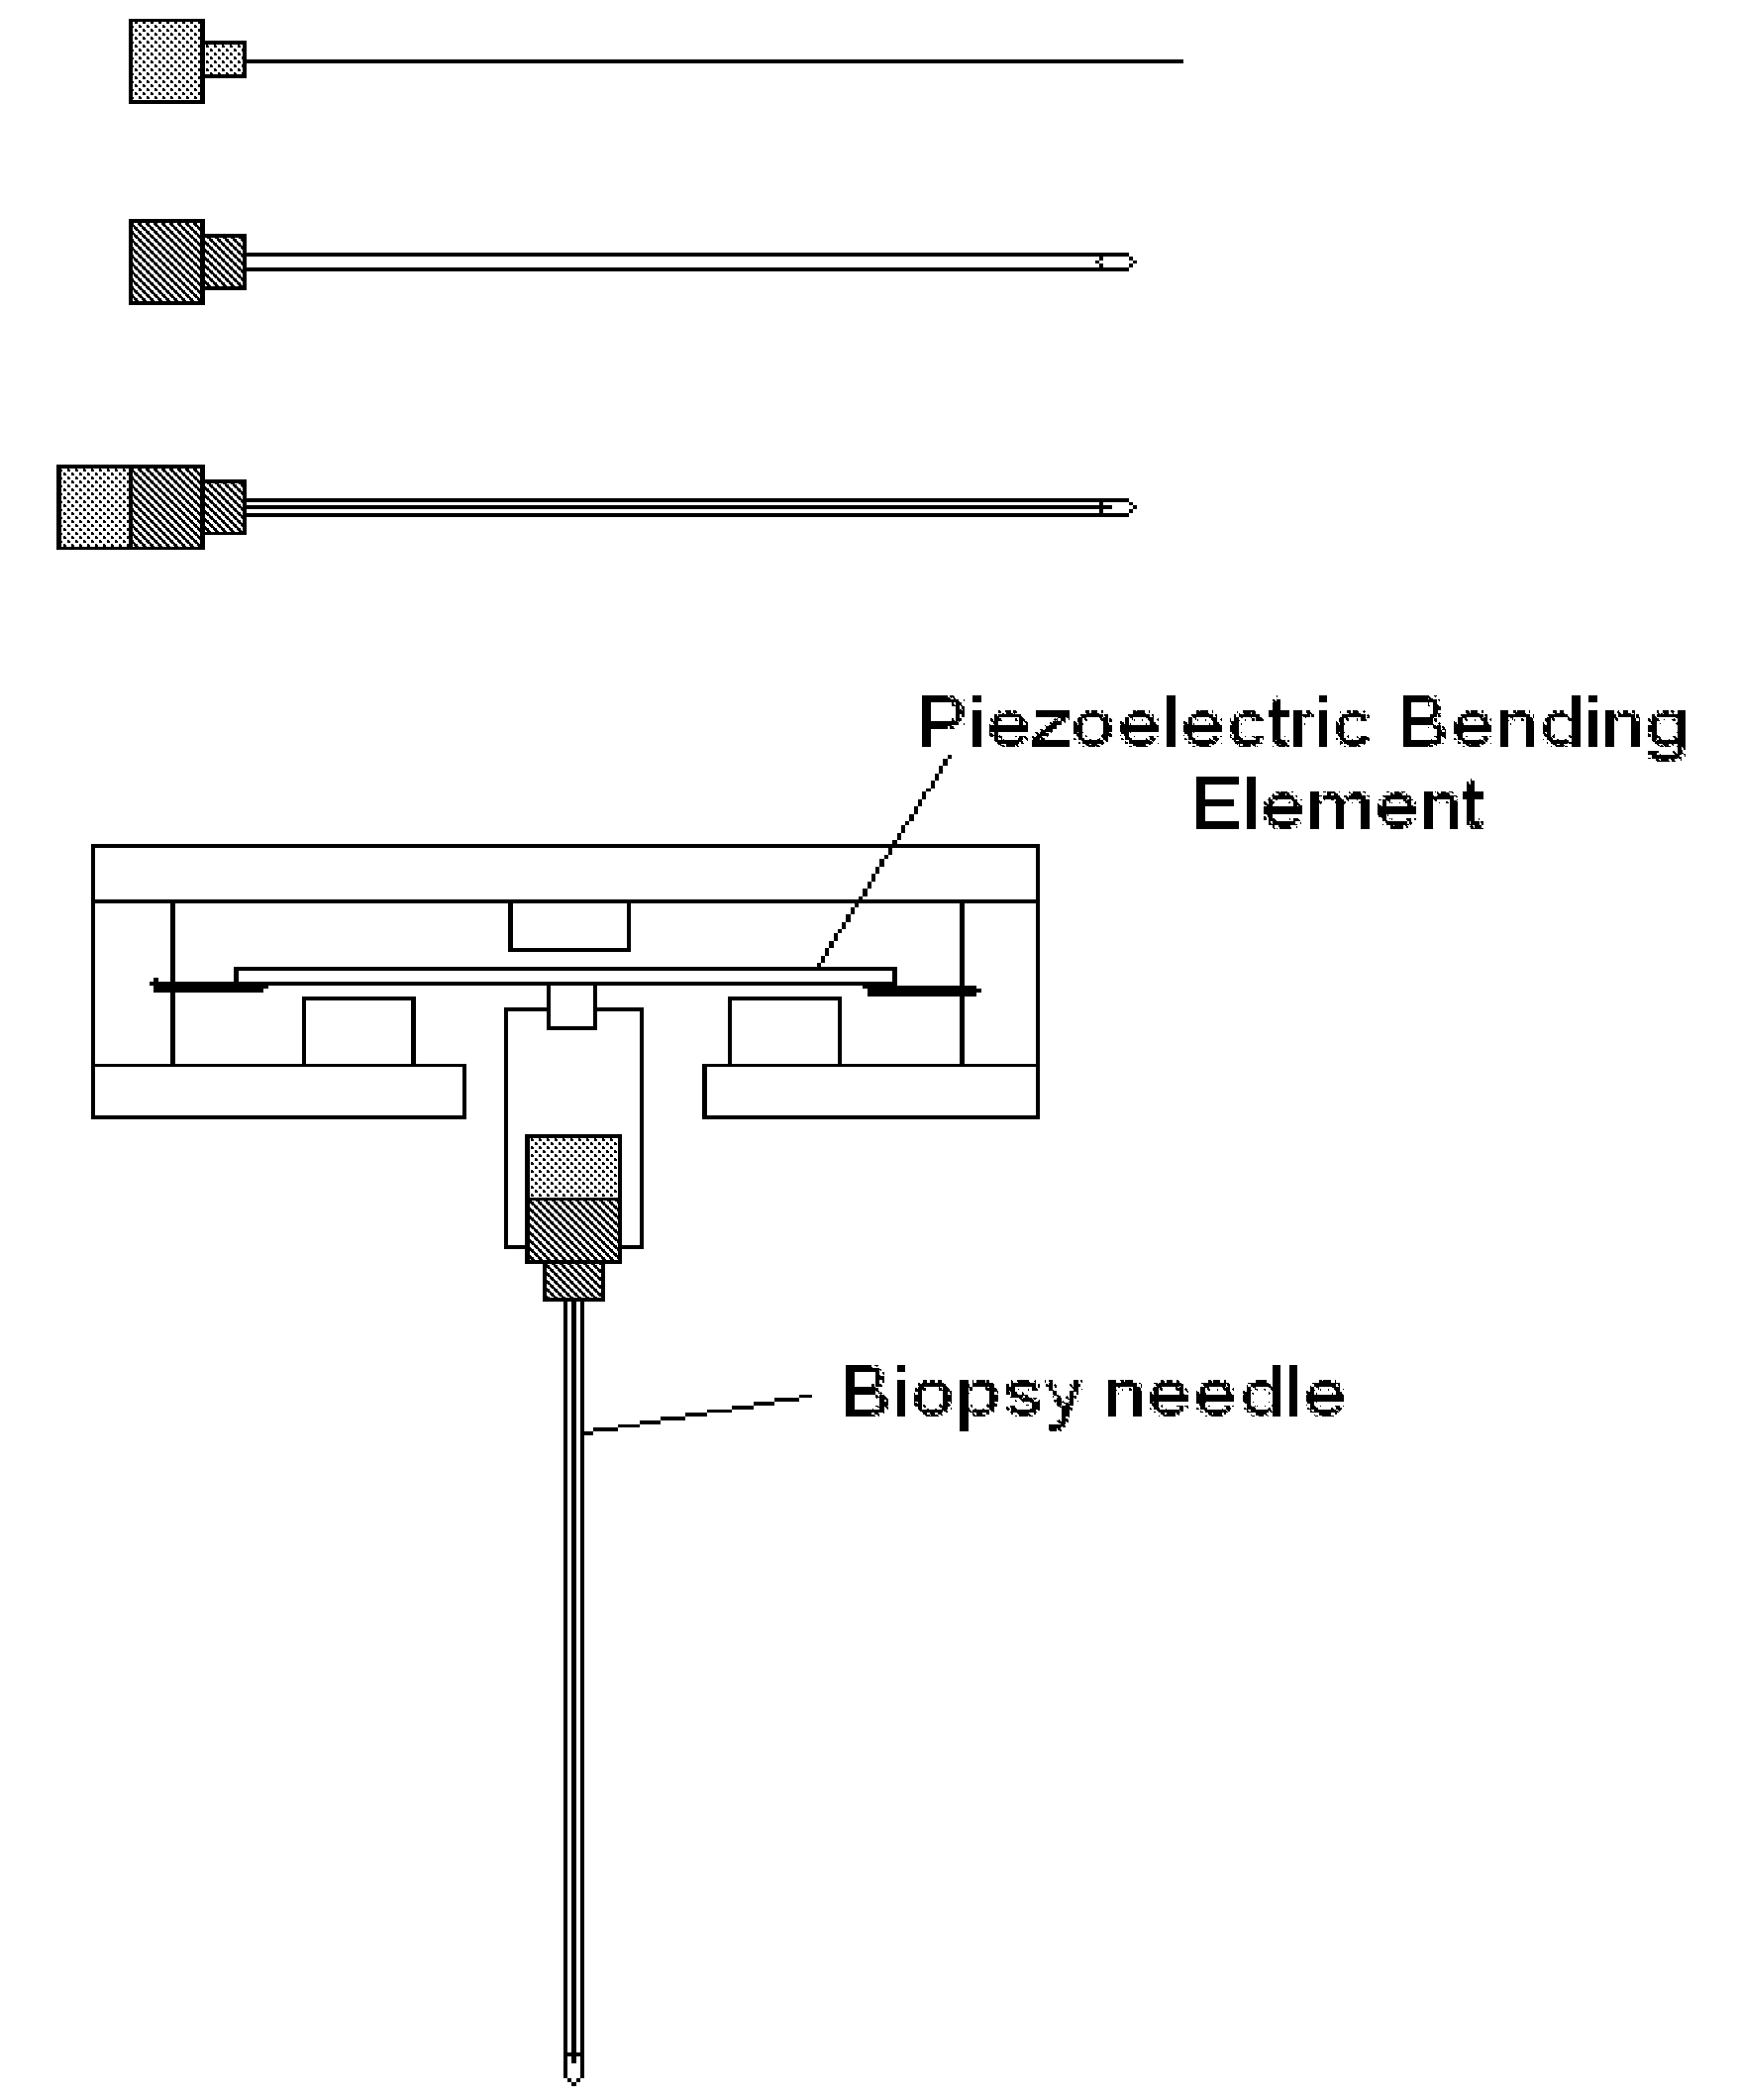 Novel needle driver for magnetic resonance elastography